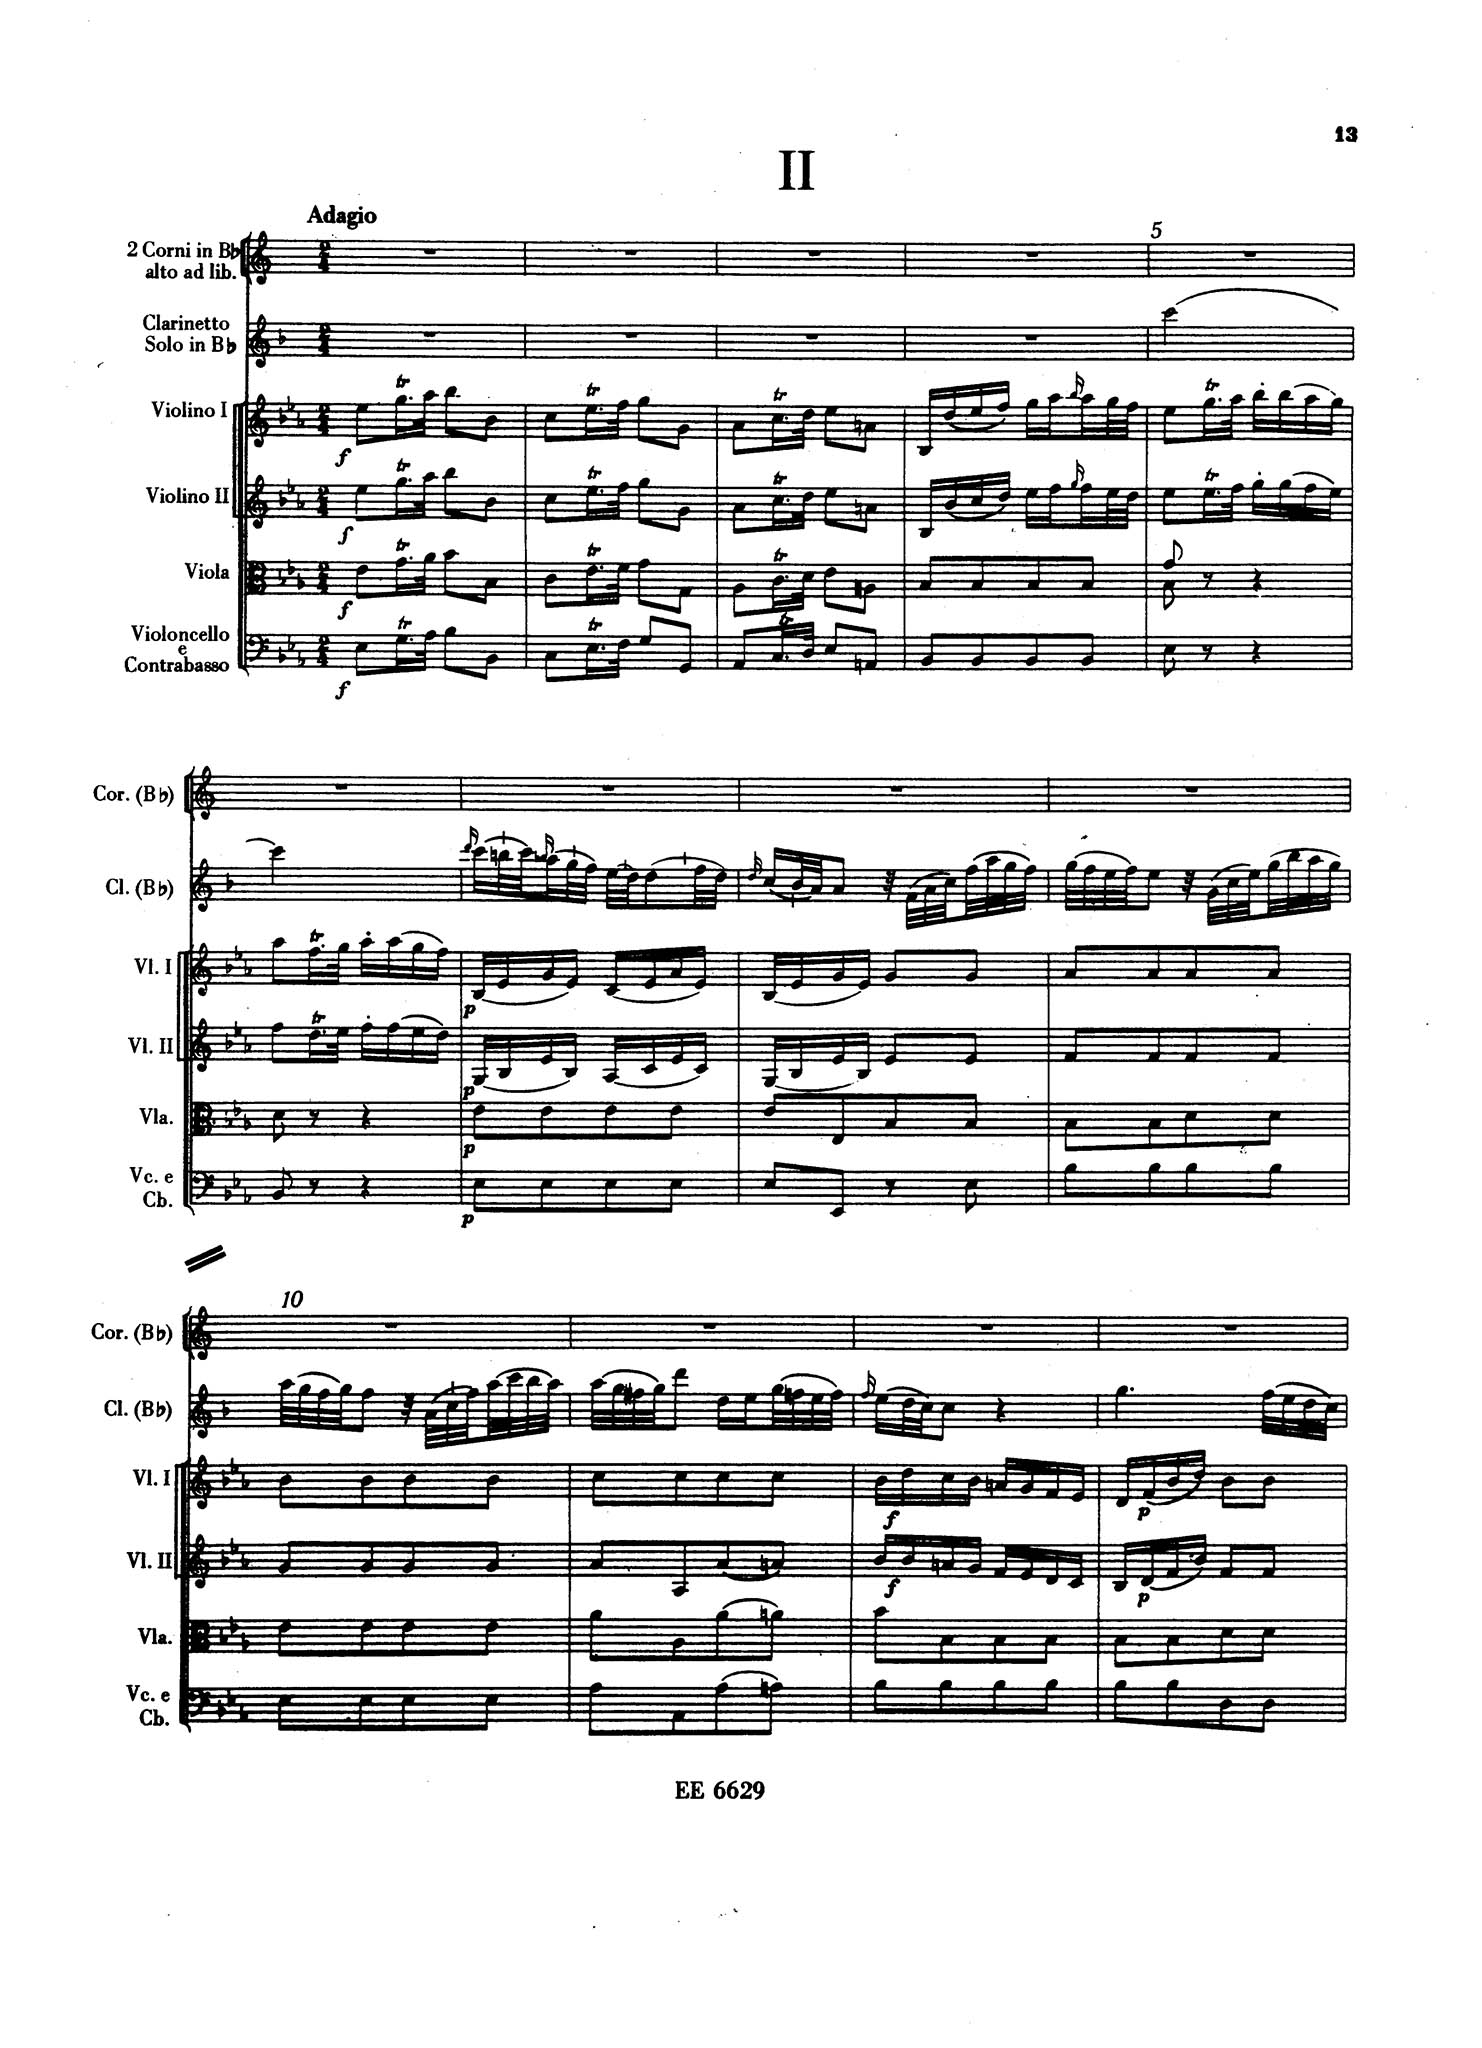 Clarinet Concerto in B-flat Major - Movement 2